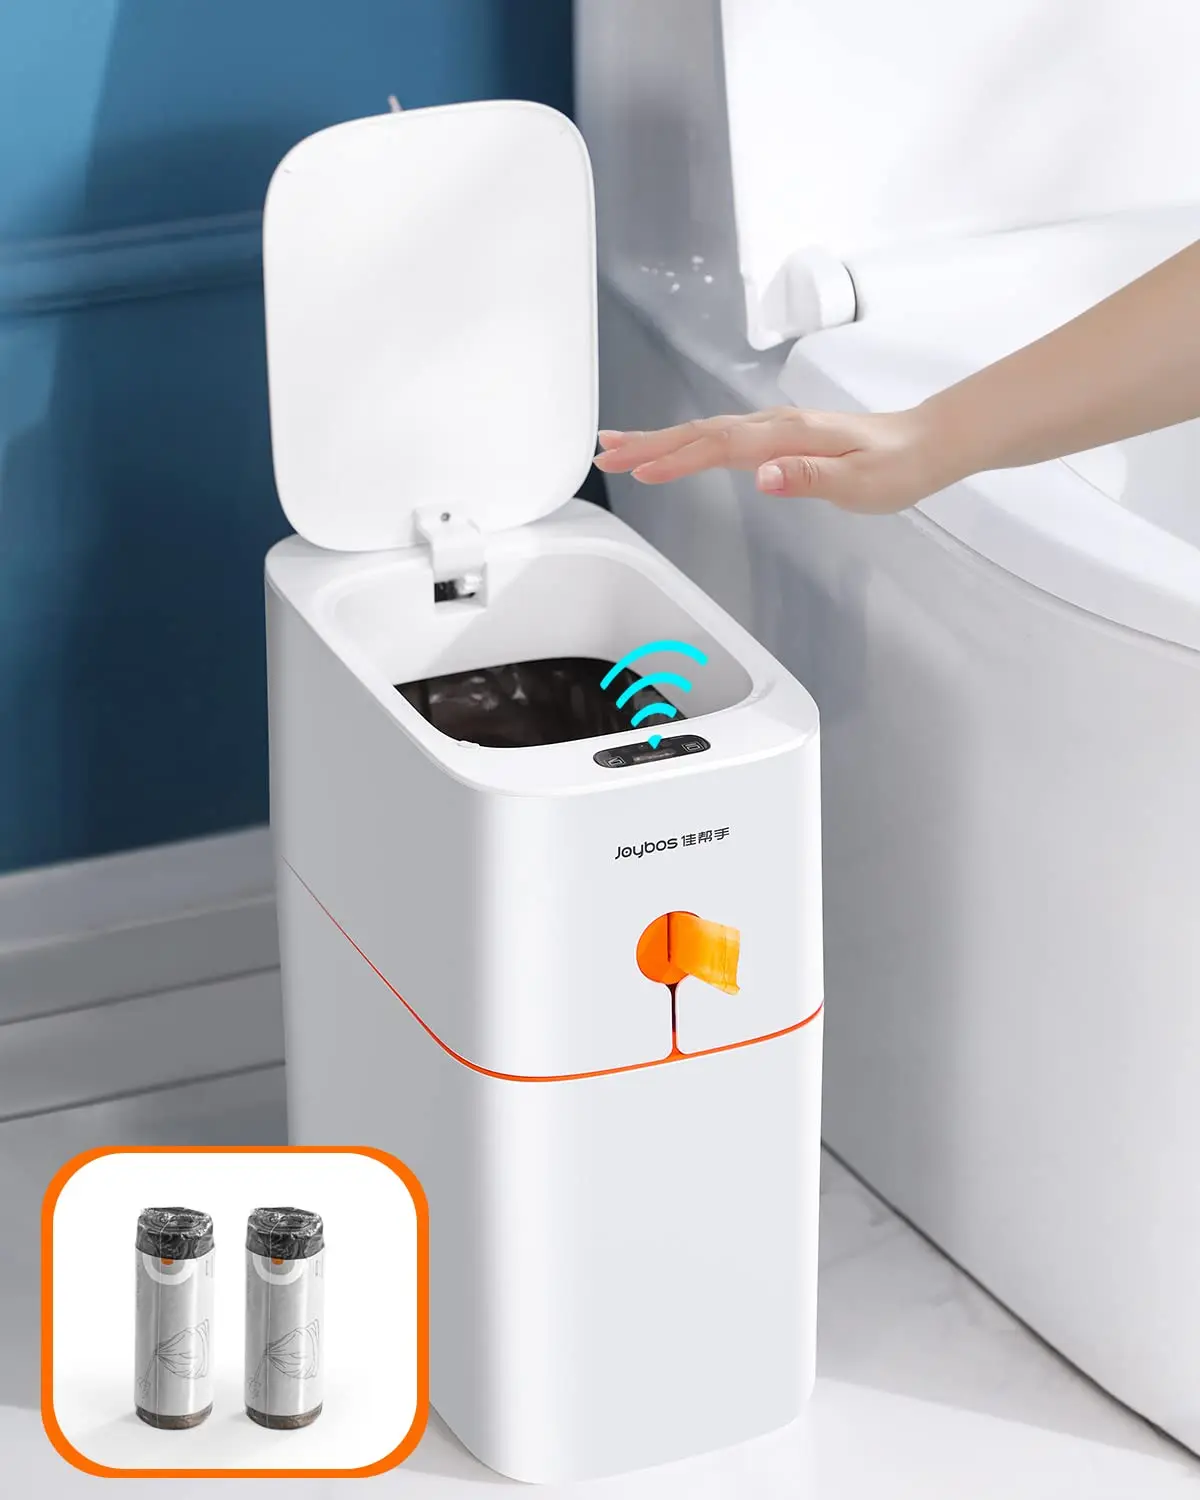 Joybos Smart touchless motion sensor bathroom trash can